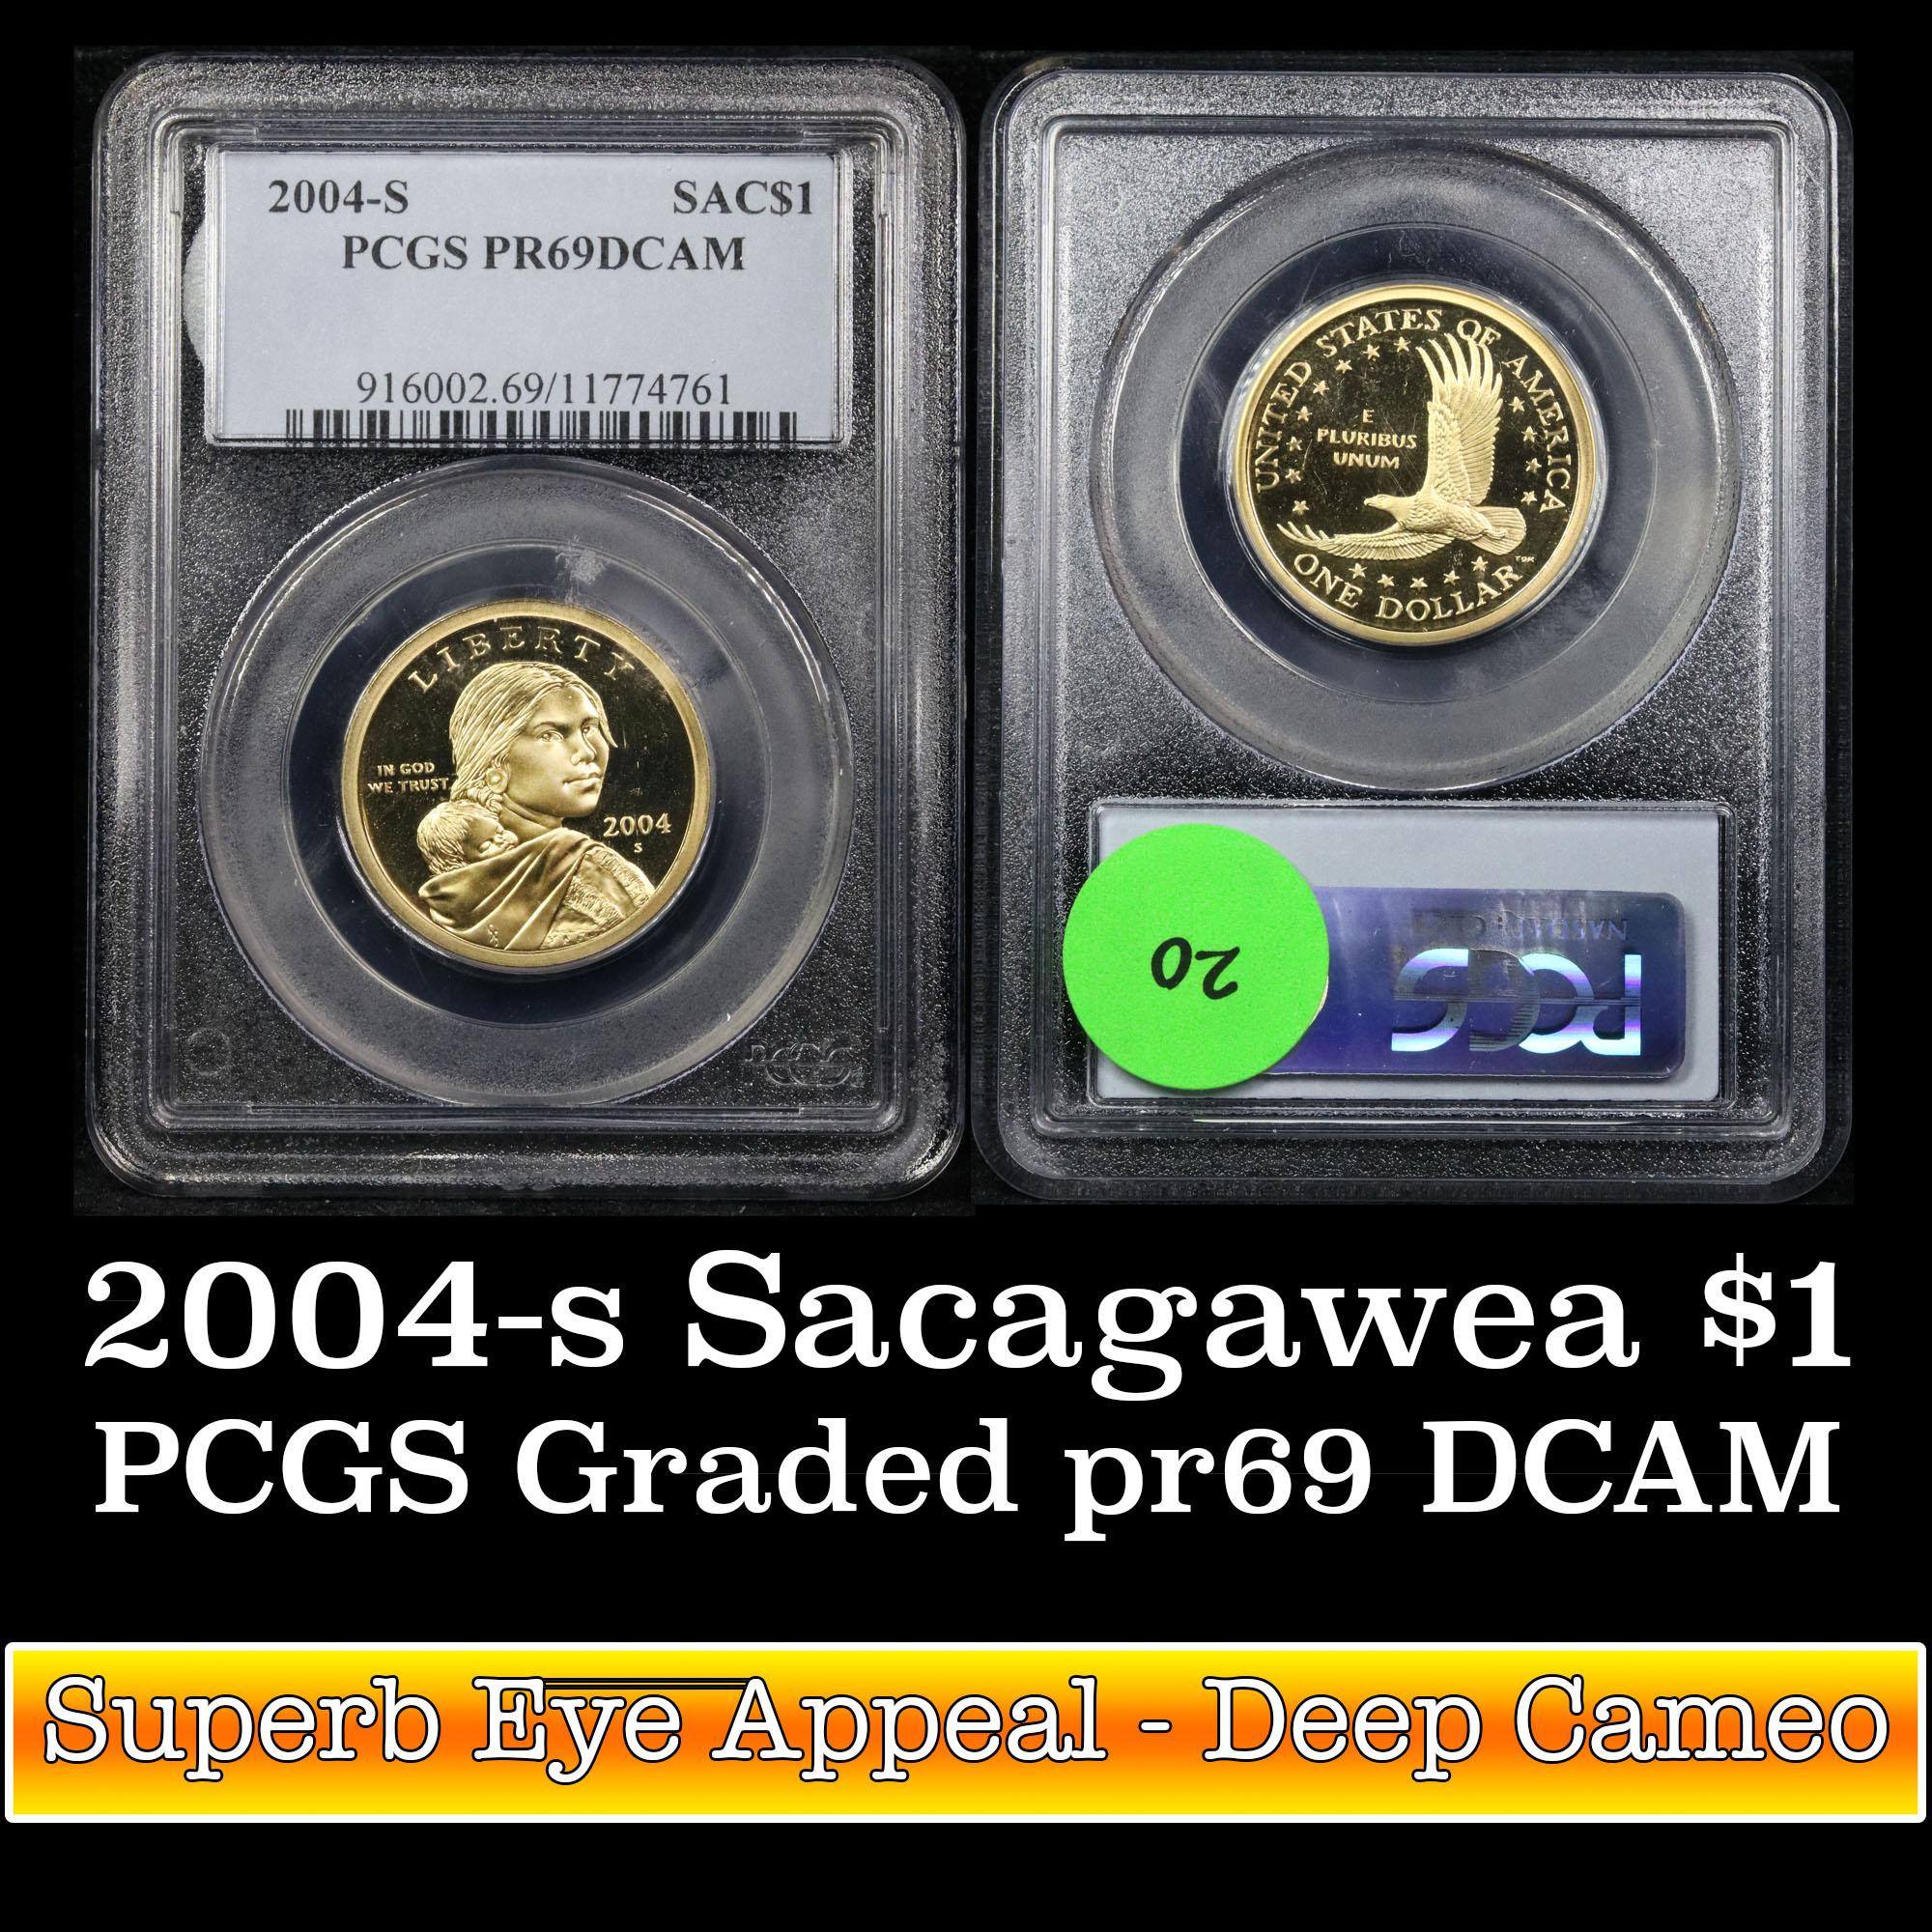 PCGS 2004-s Sacagawea Golden Dollar $1 Graded pr69 dcam By PCGS